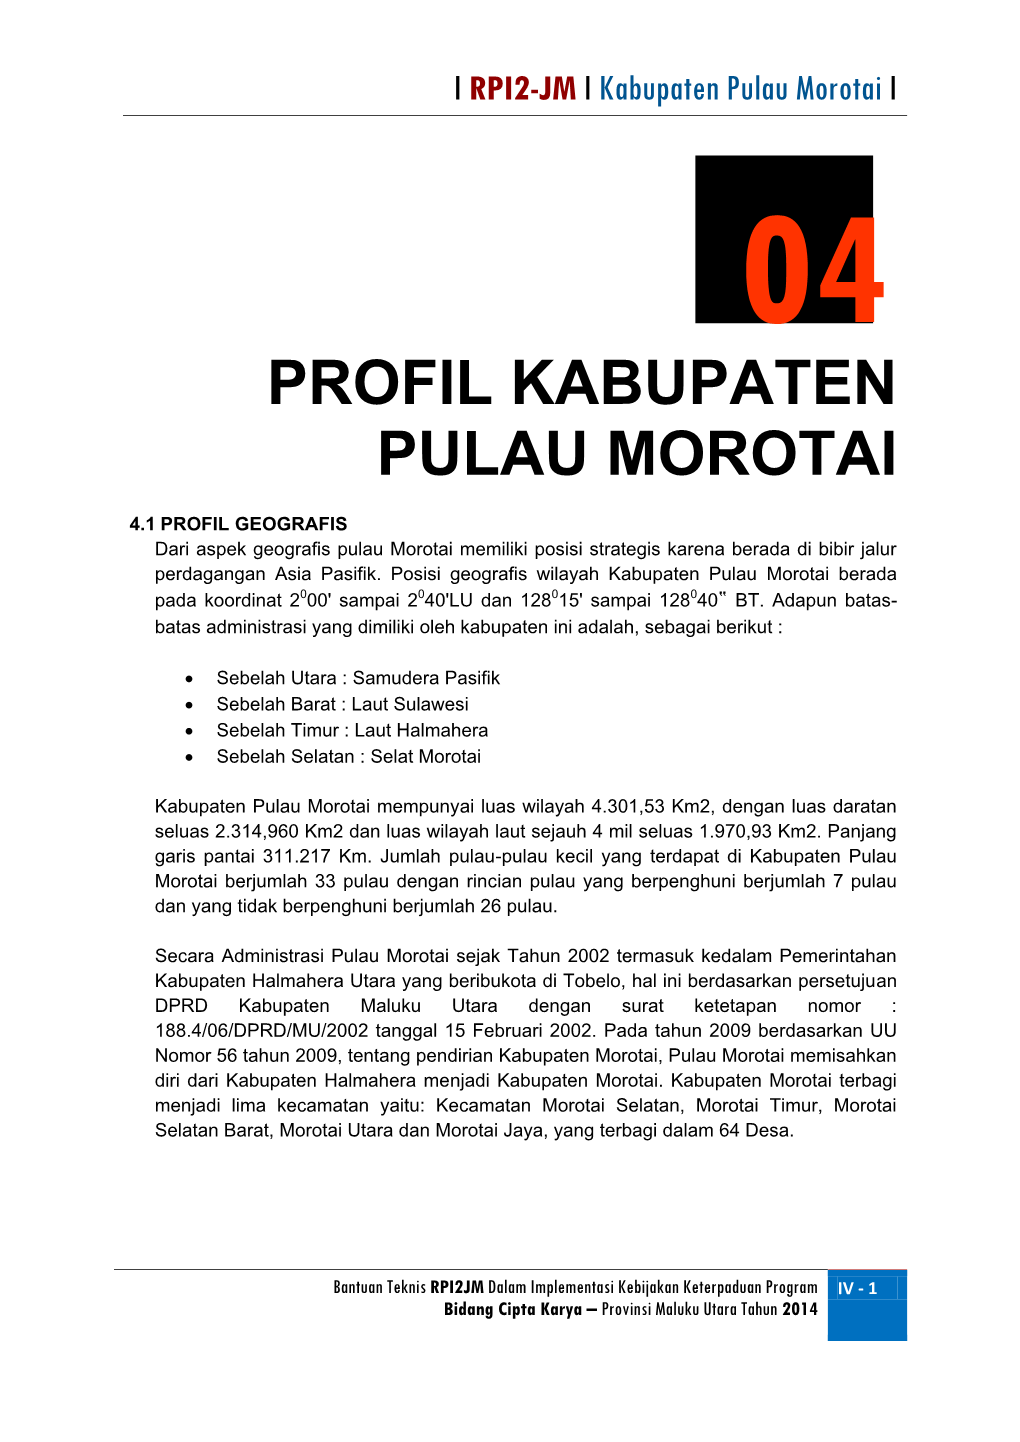 Profil Kabupaten Pulau Morotai